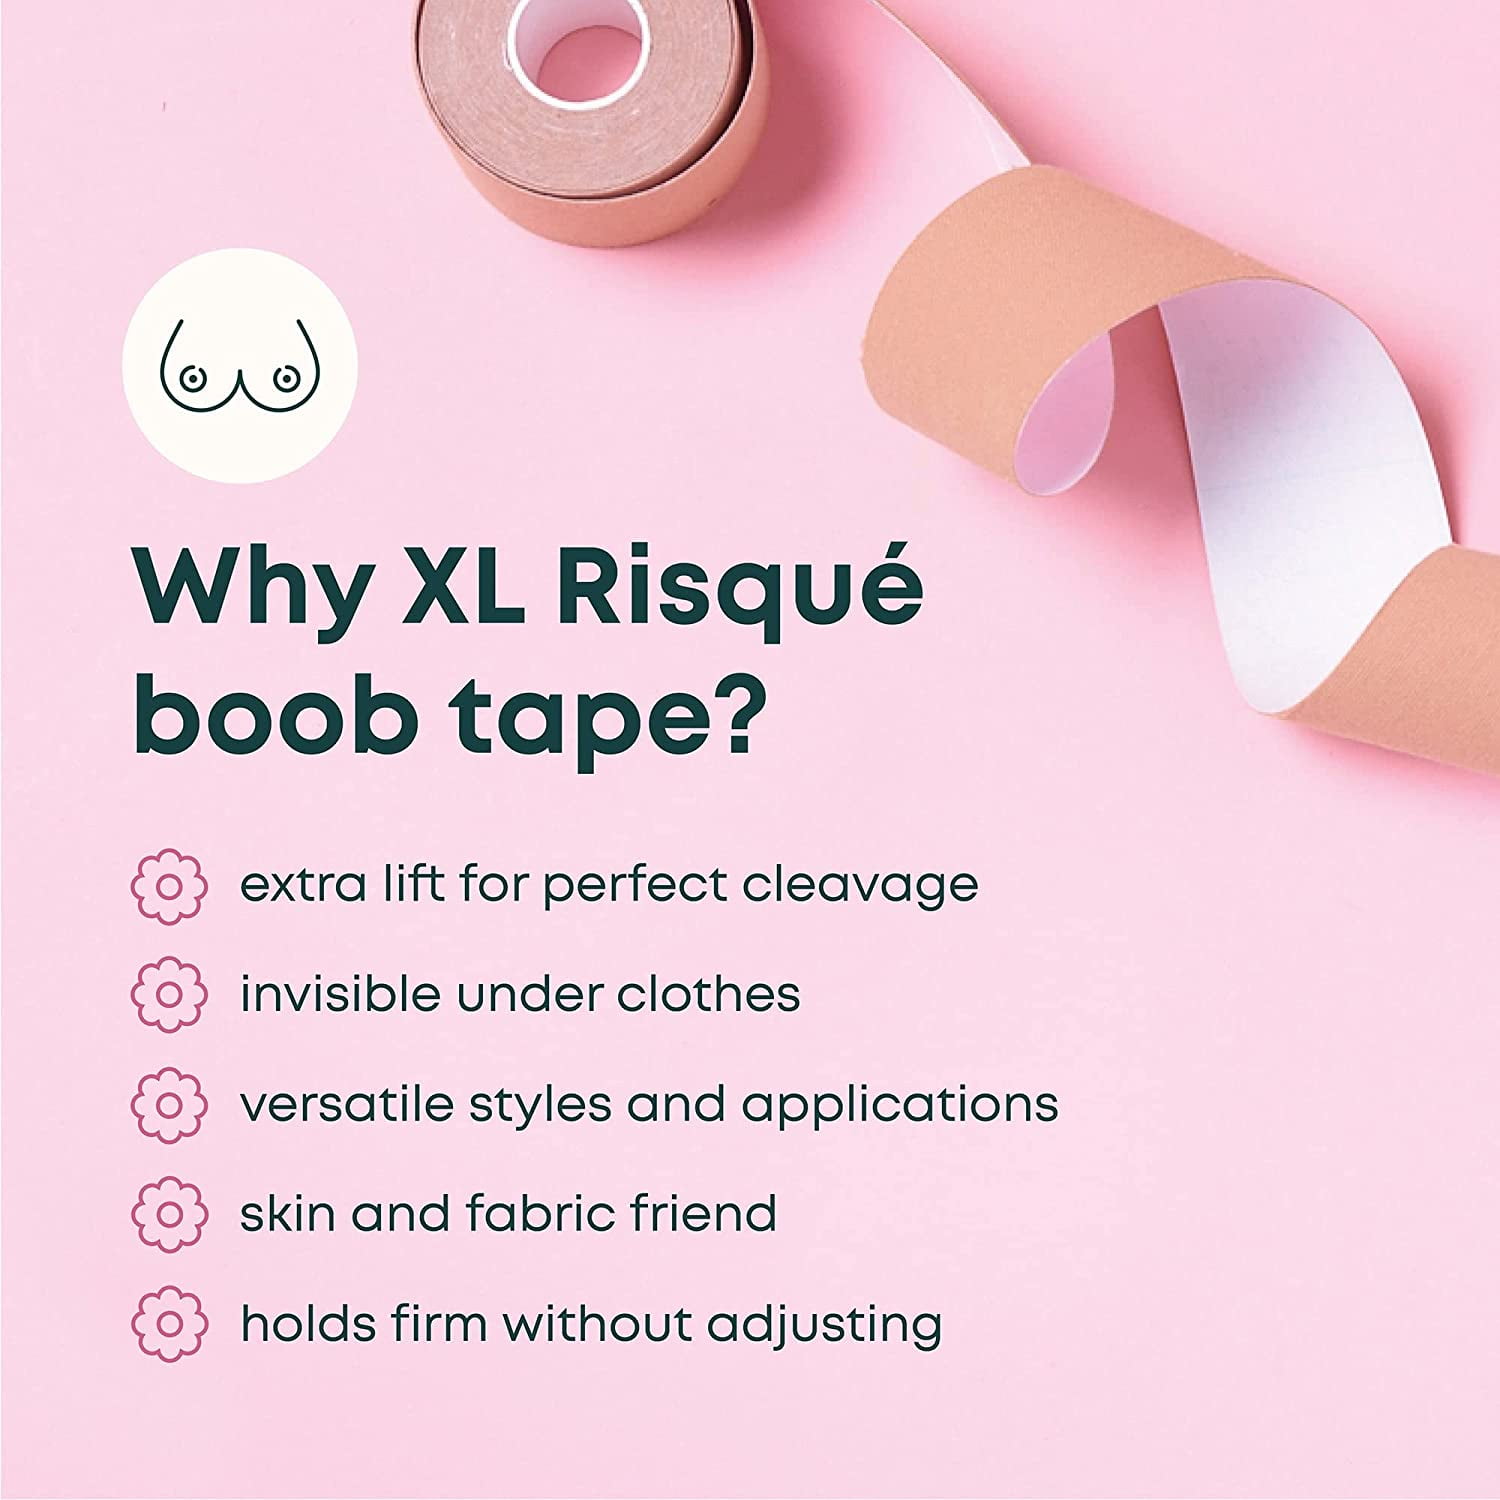 Risque XL Breast Lift Tape for Lift & Fashion - Bra Alternative of Breasts ( Black) 